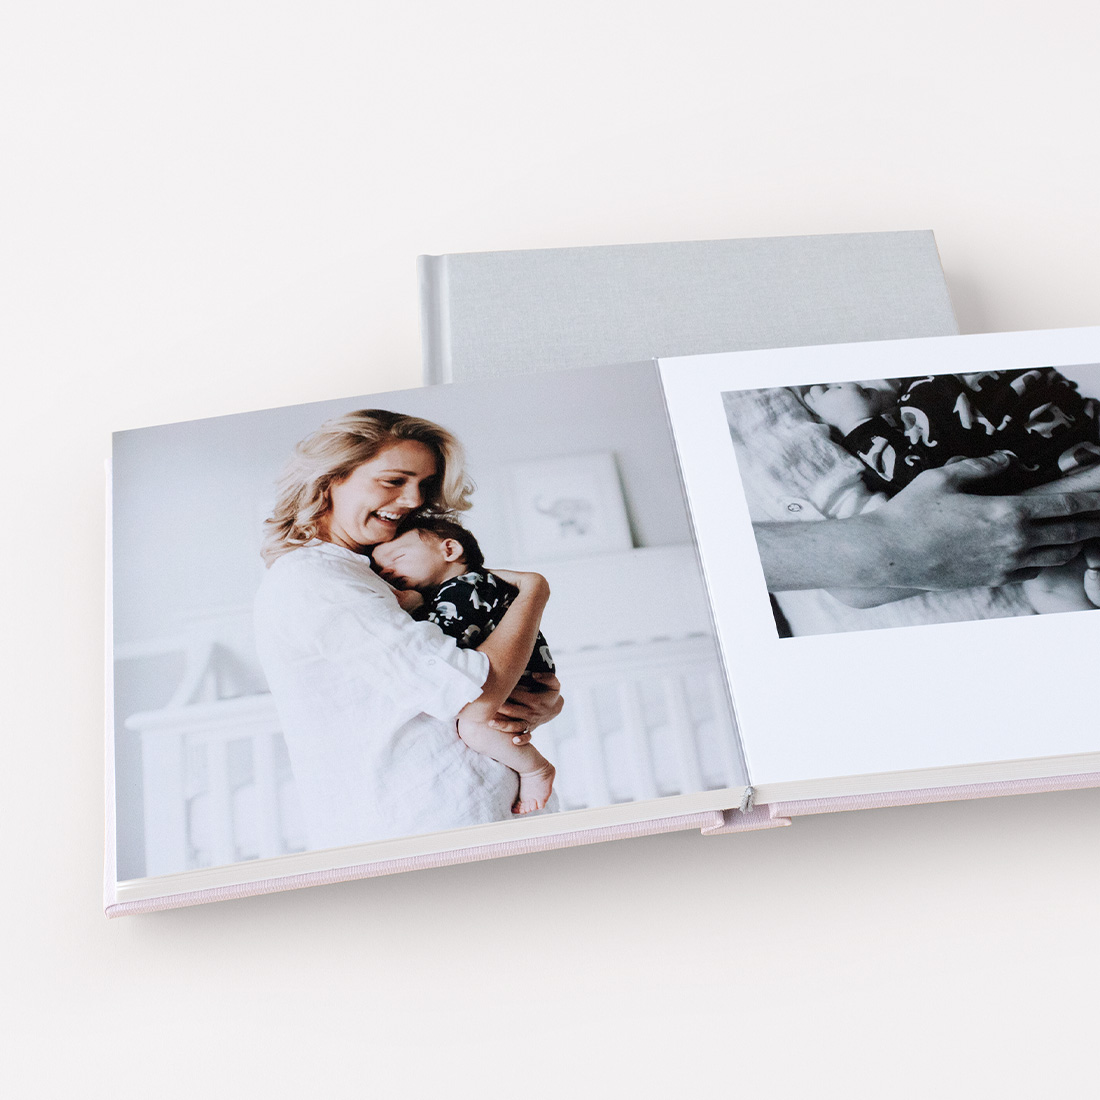 Quality Photo Albums - Start Creating Online - MILK Books